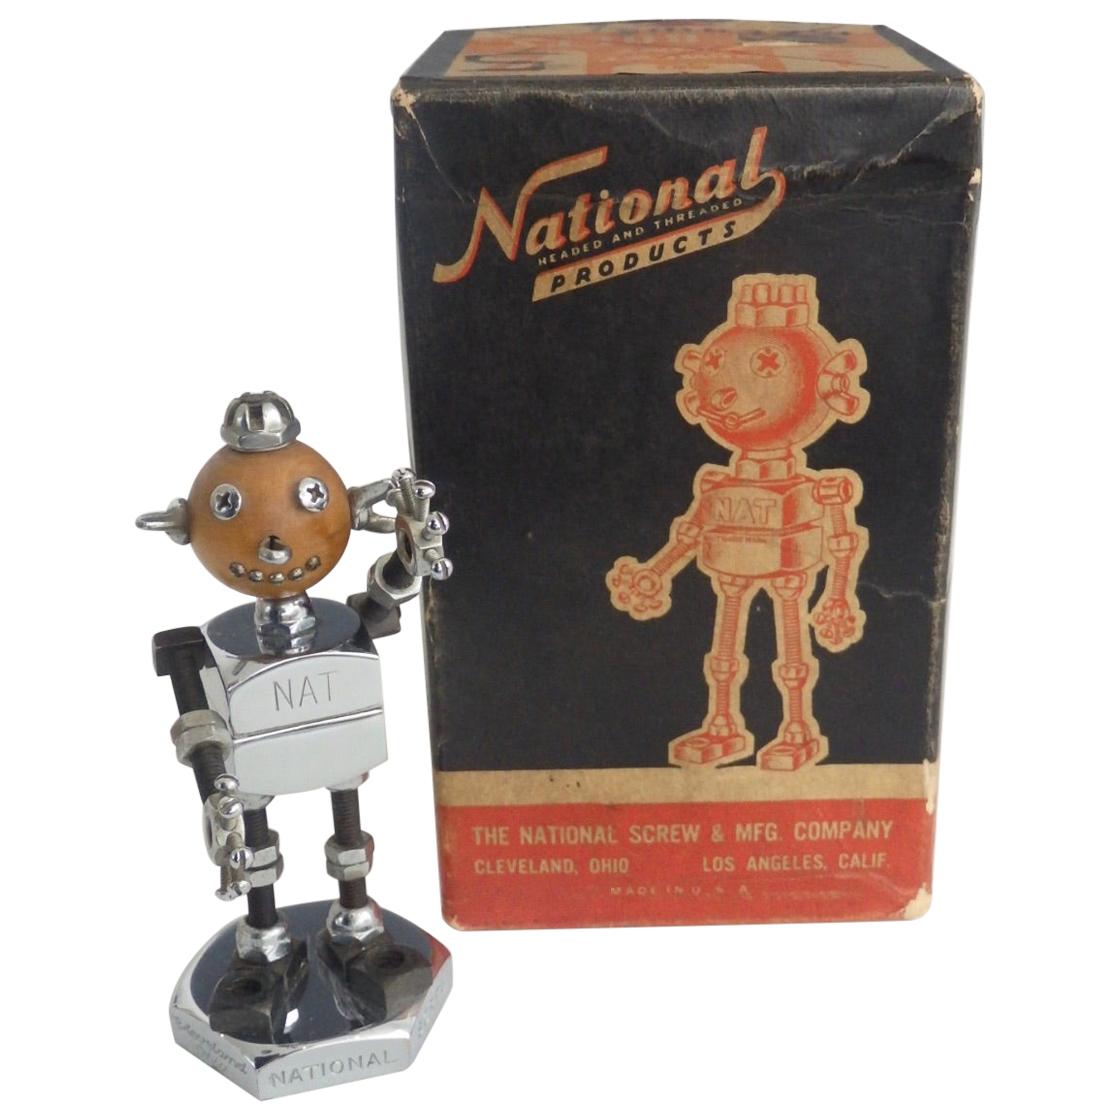 National Hardware Desk Top Advertising Logo Robot Sculpture